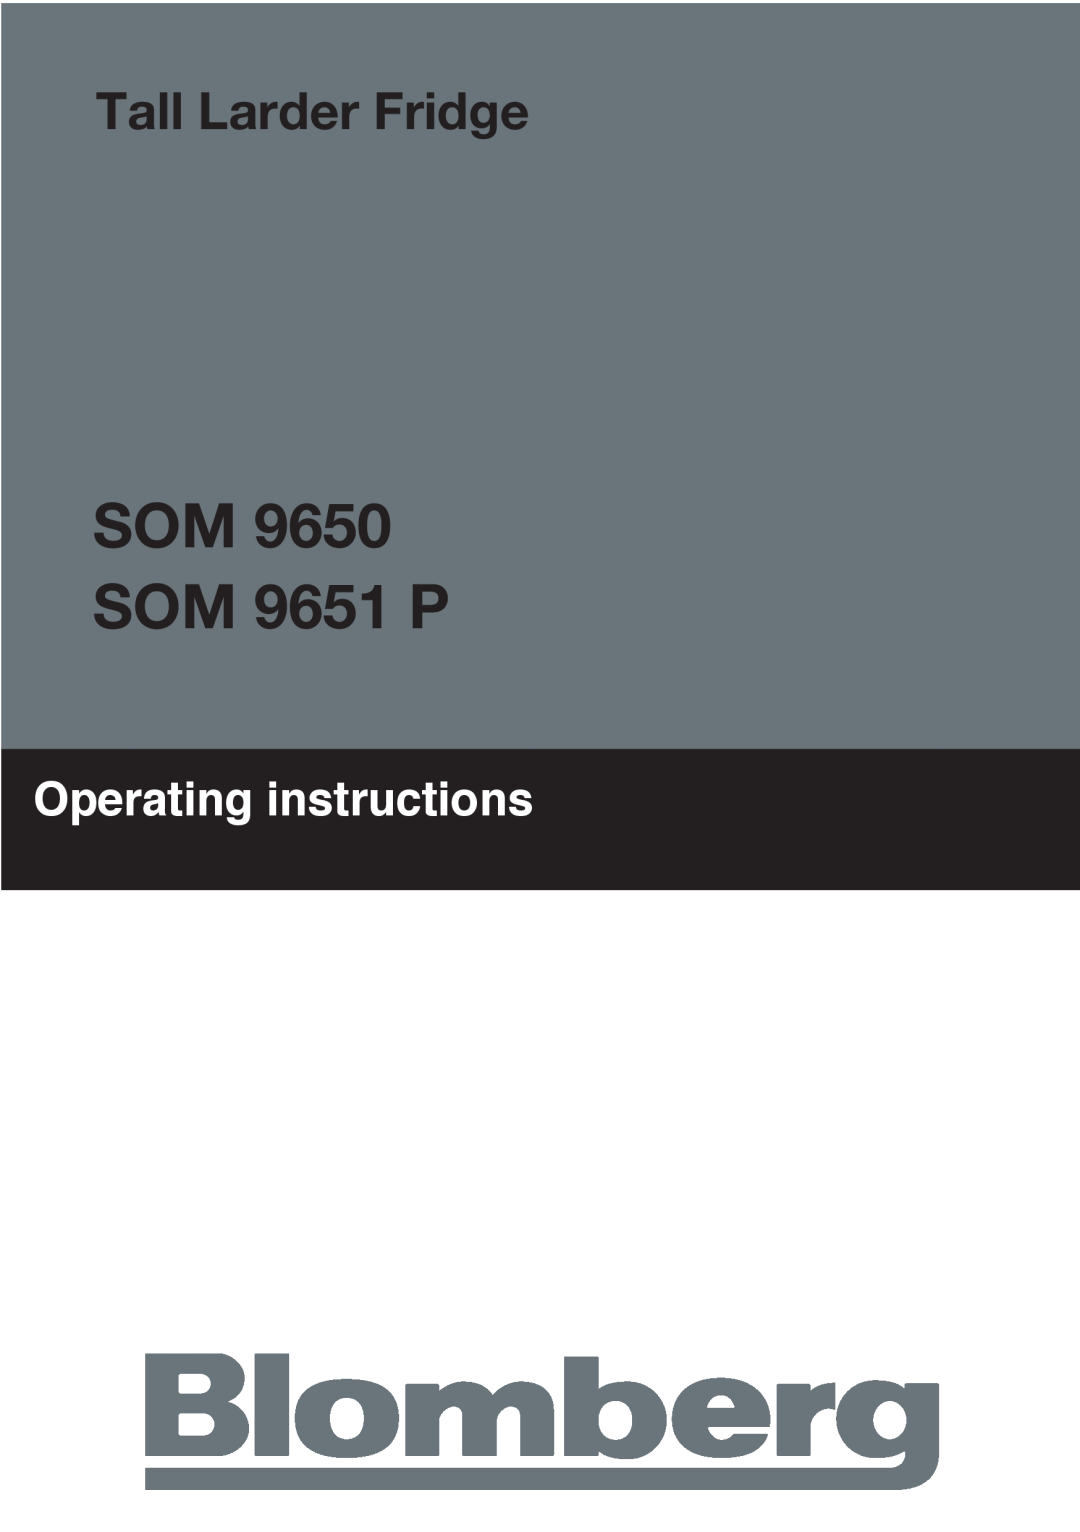 Blomberg SOM 9650 manual SOM SOM 9651 P, Tall Larder Fridge, Operating instructions 